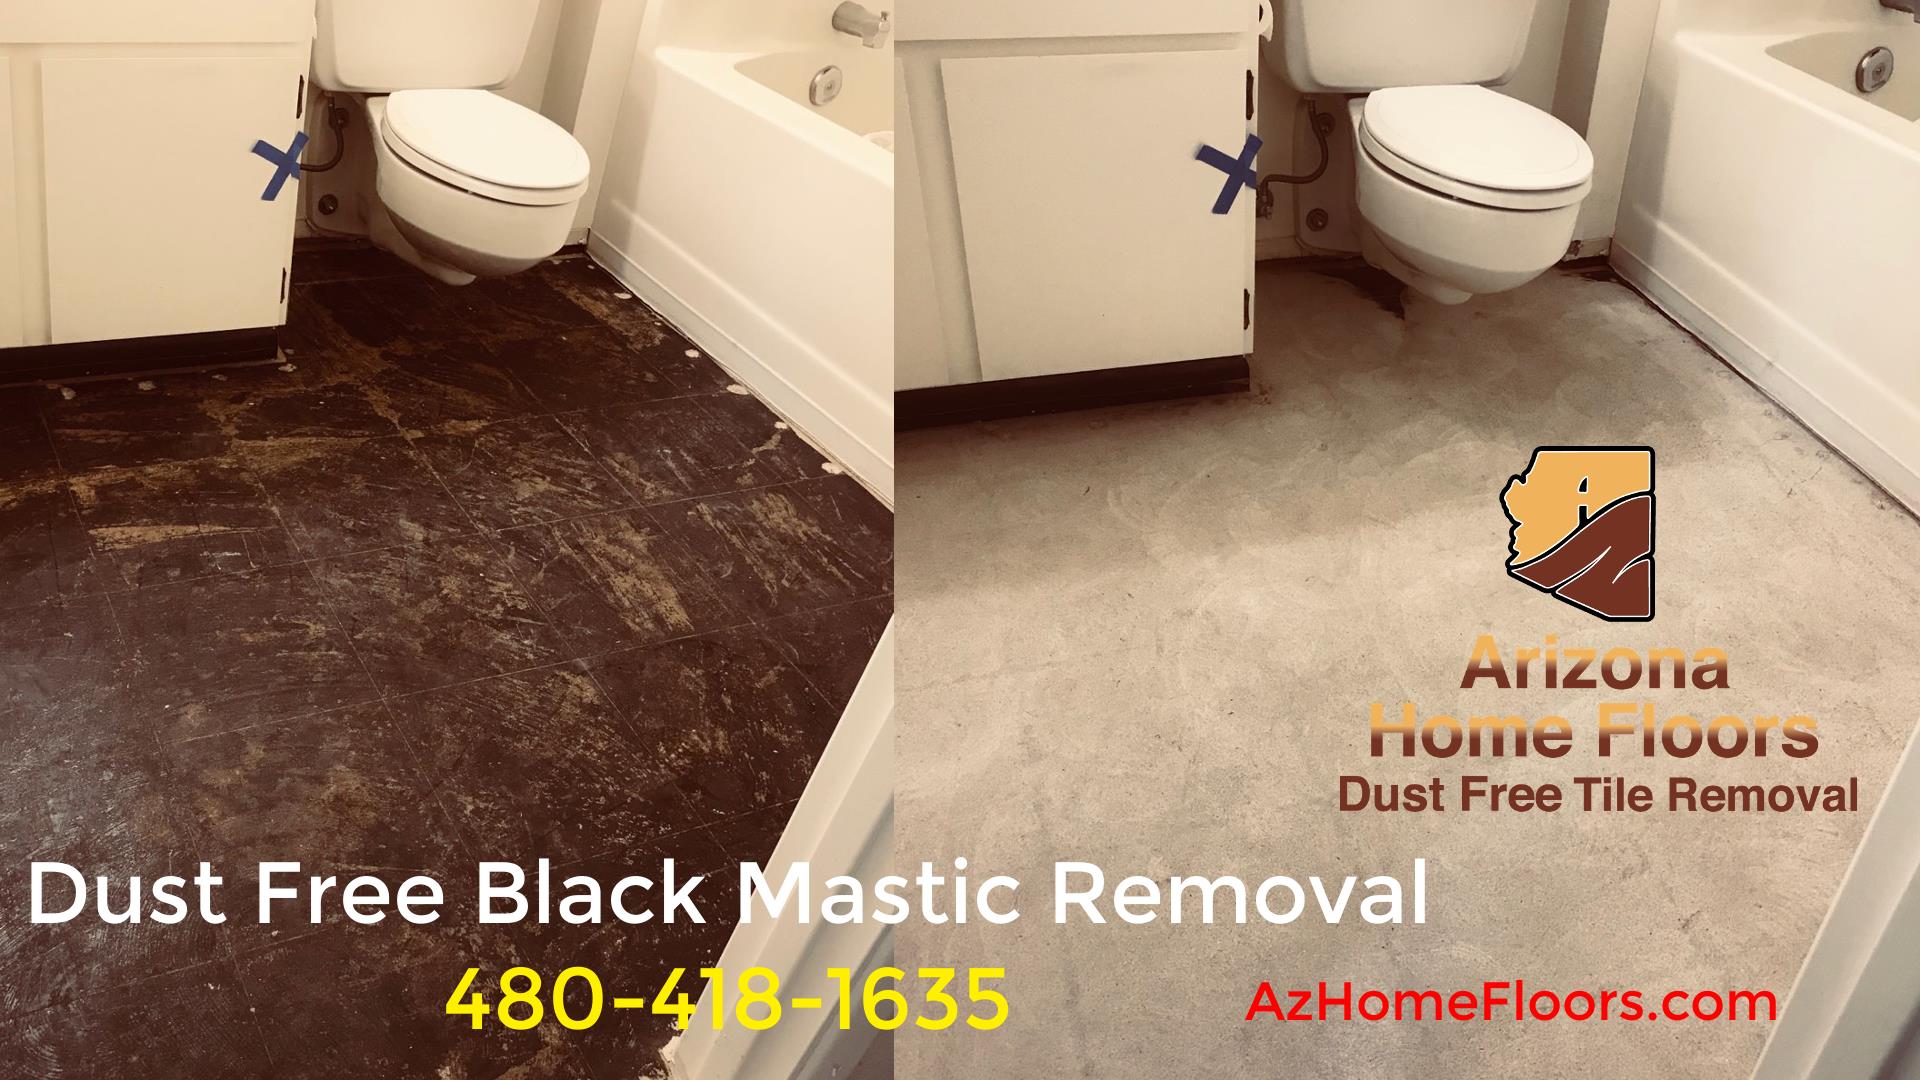 Arizona Dust Free Floor Removal, Floor Tile Mastic Removal